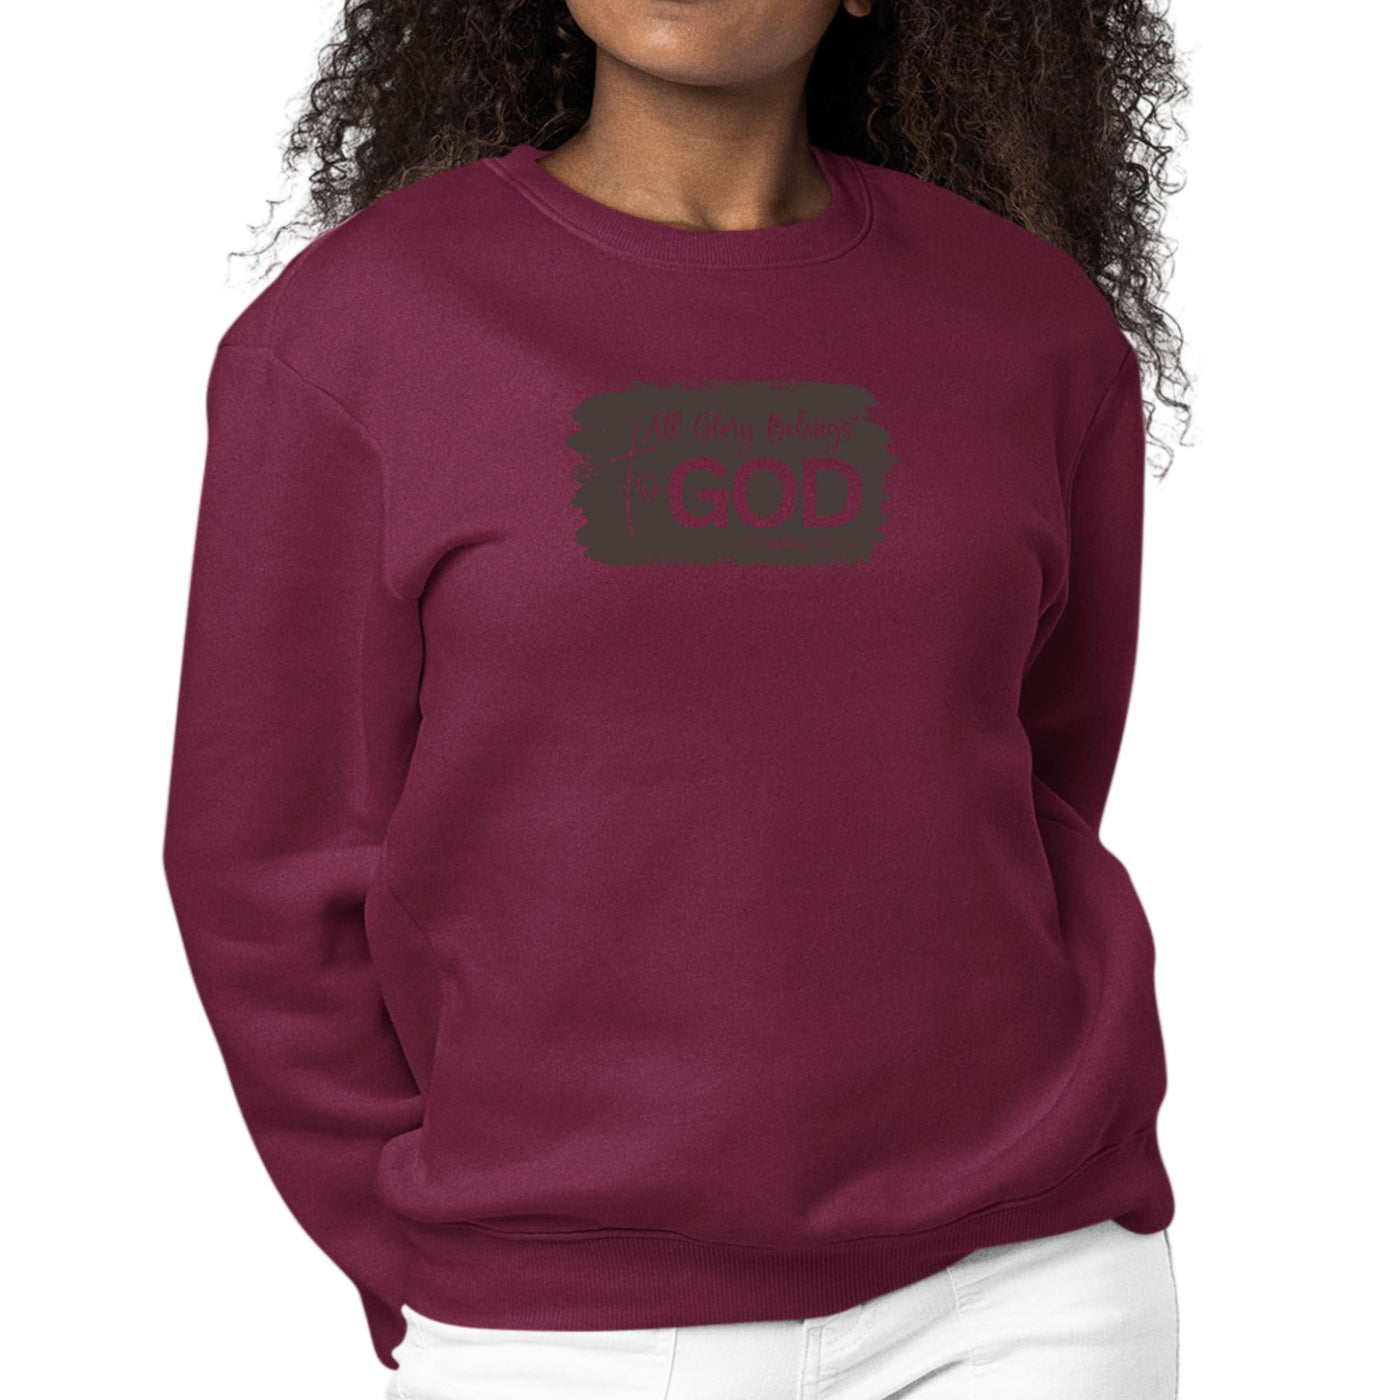 Womens Graphic Sweatshirt All Glory Belongs To God Christian - Sweatshirts